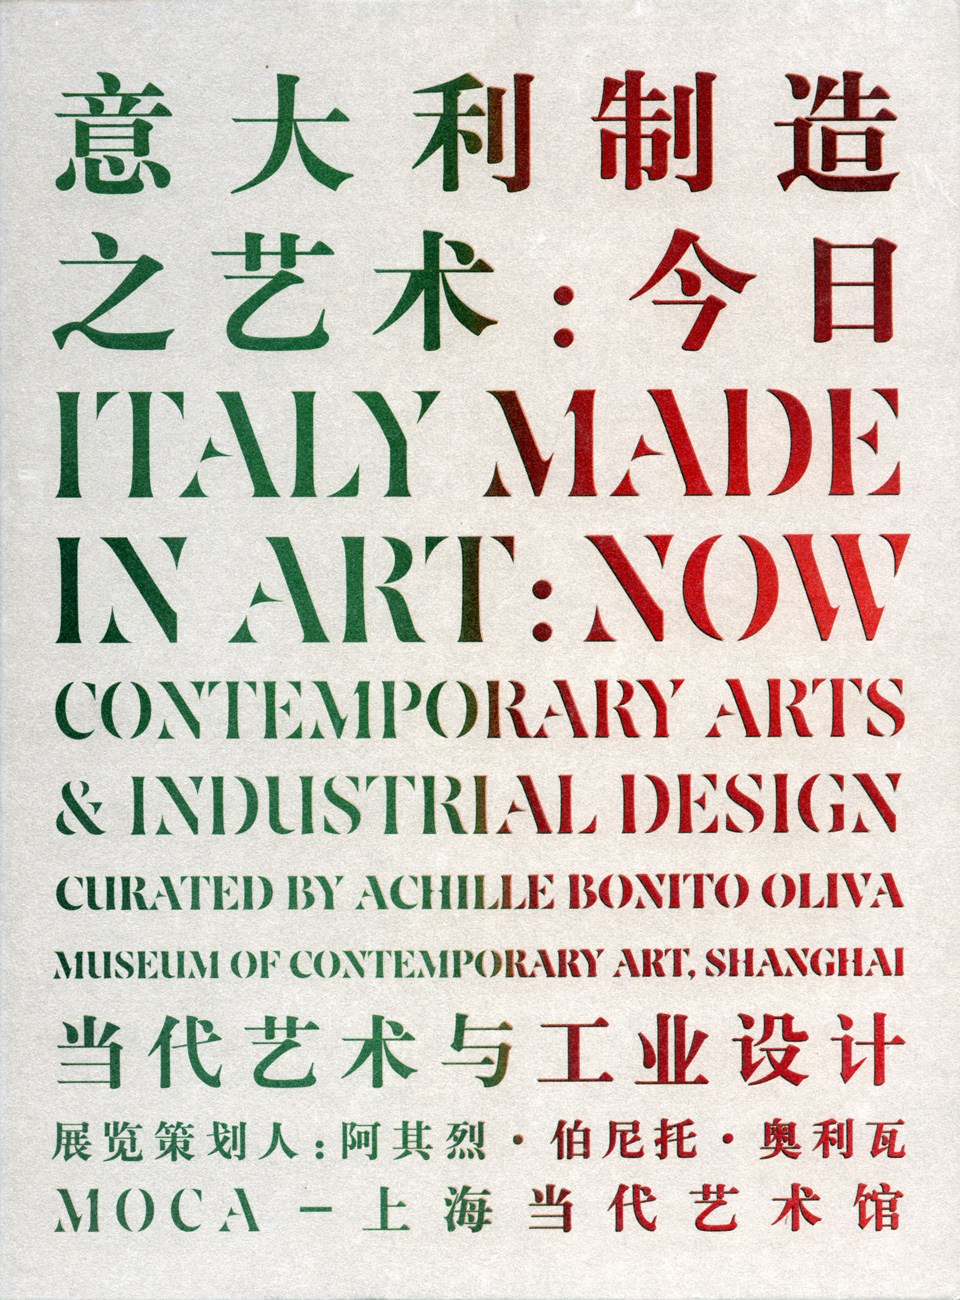 Italy-Made-In-Art-Now-catalogo